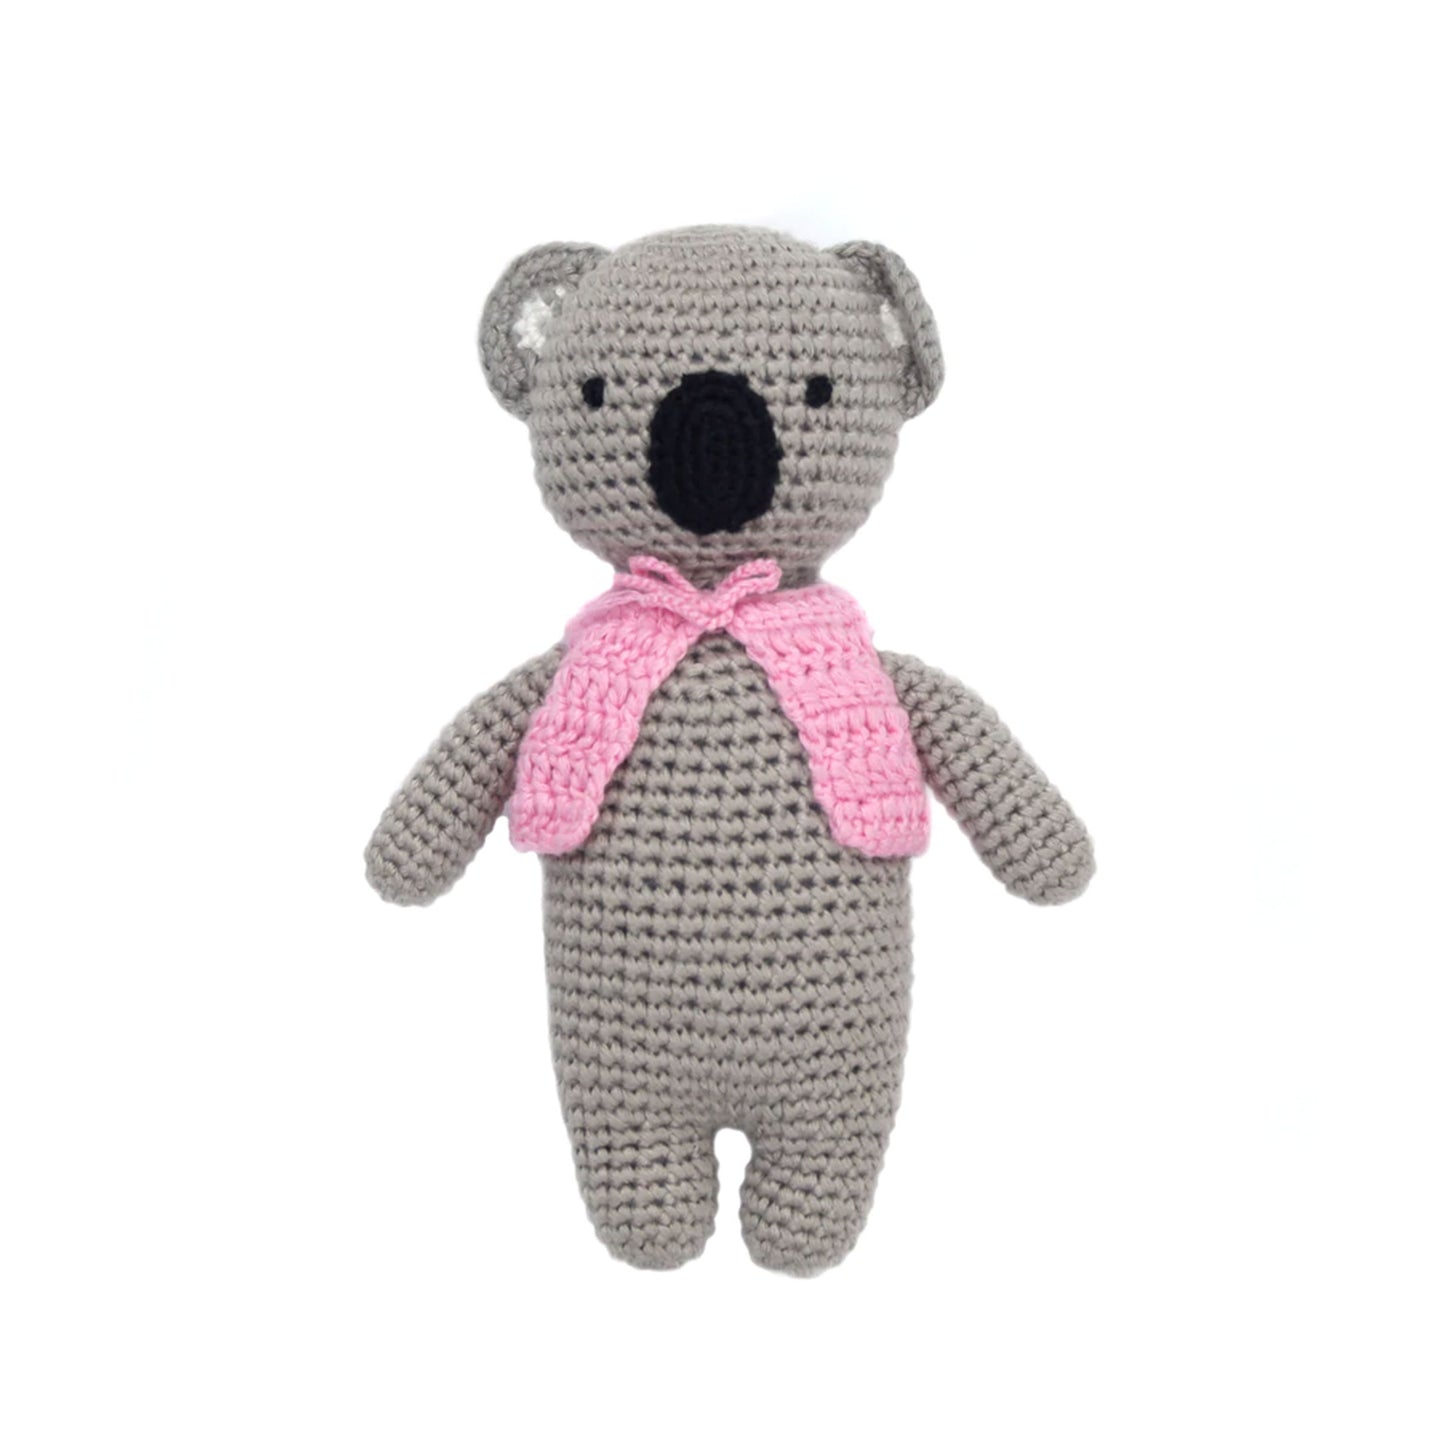 Kayla the Koala Hand-Crocheted Plush